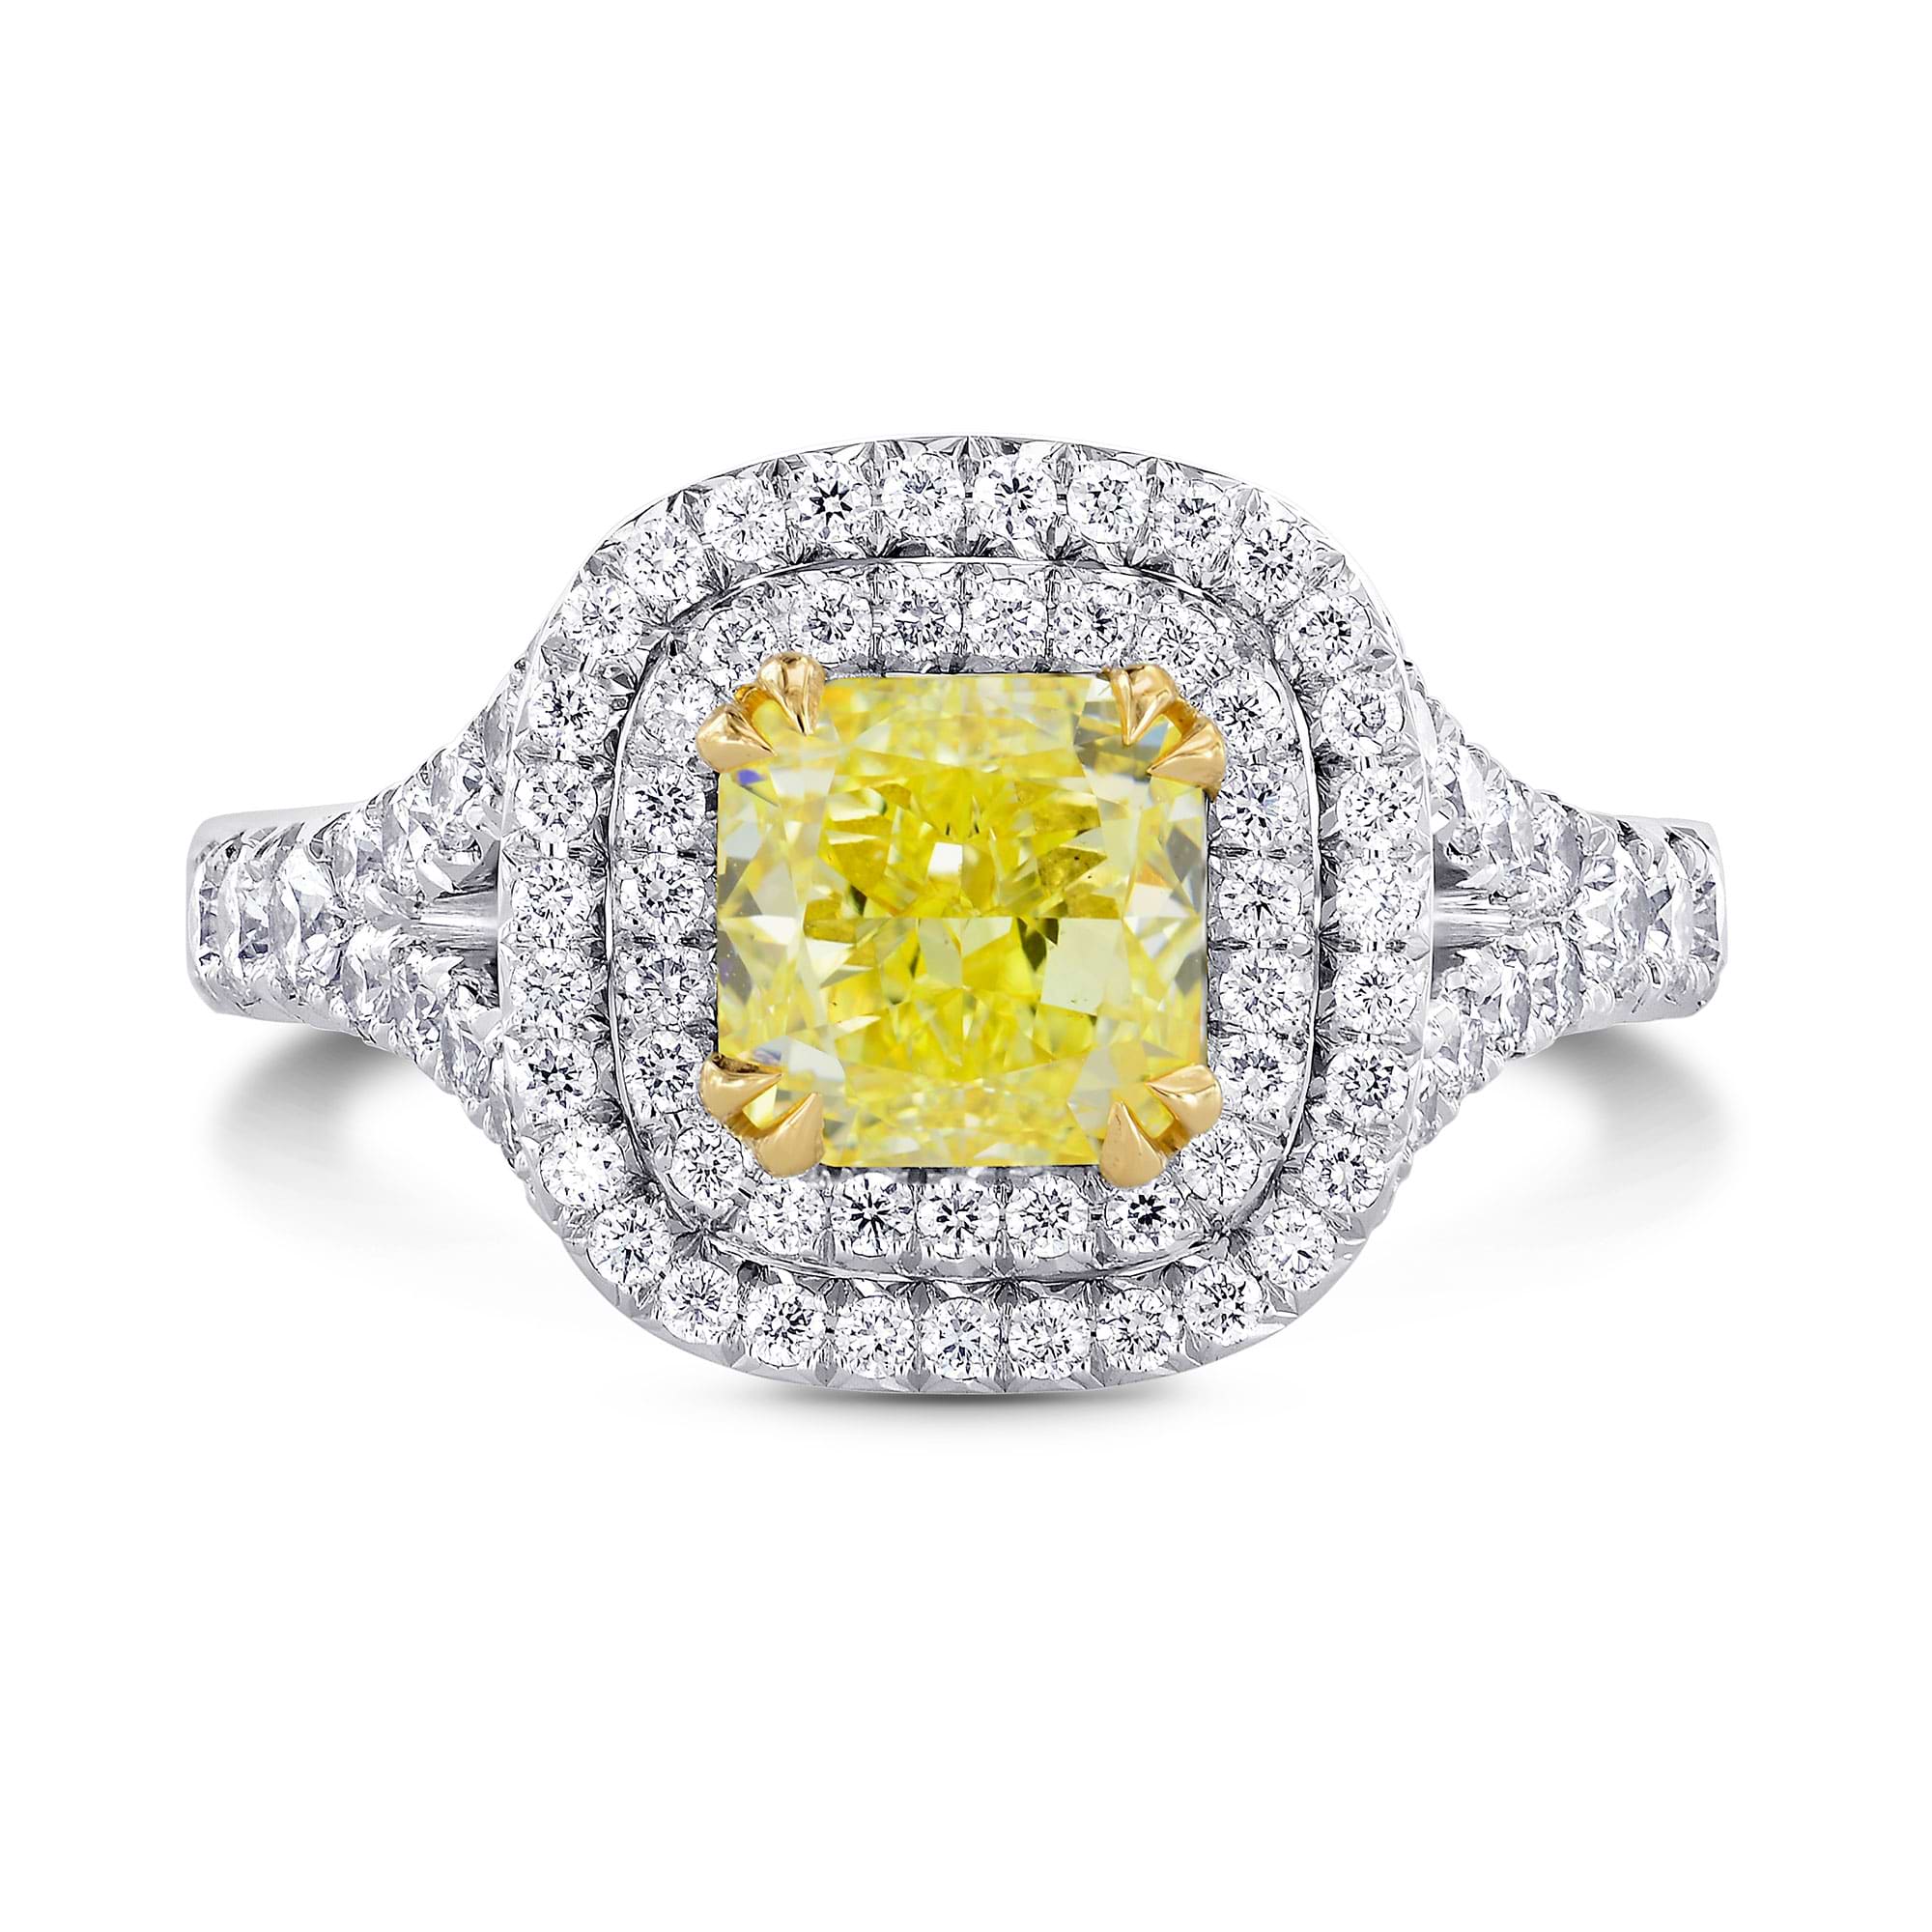 Fancy Intense Yellow Cushion Diamond Halo Ring, SKU 213695 (2.16Ct TW)